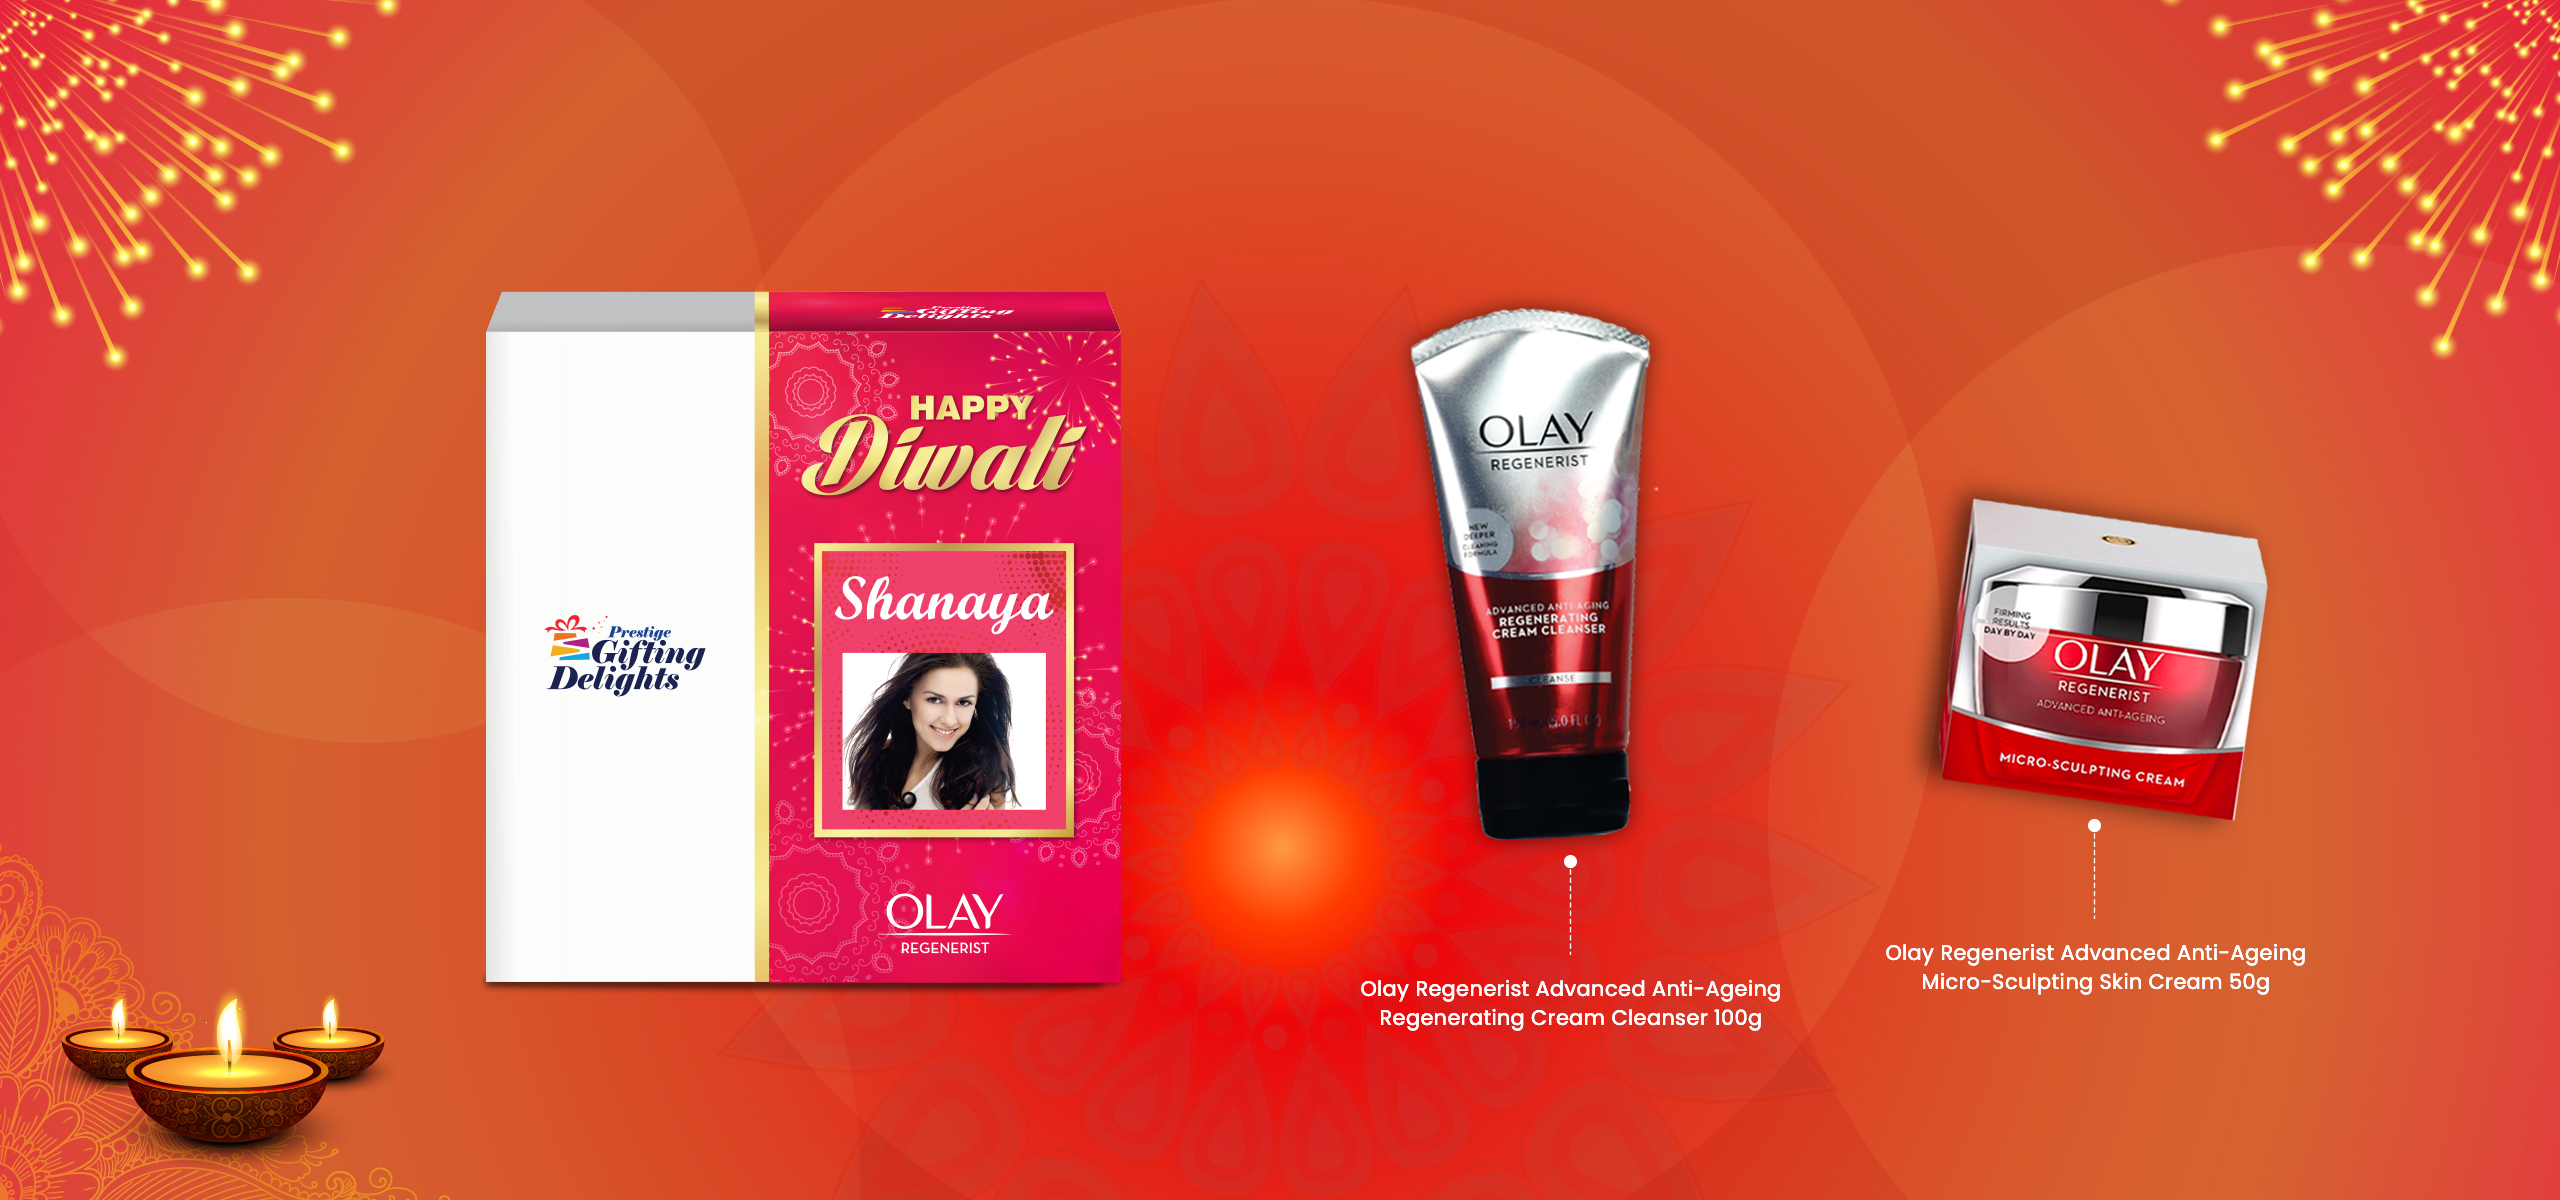 Olay Regenerist Deep Hydration Day Cream Regimen Diwali Gift Pack